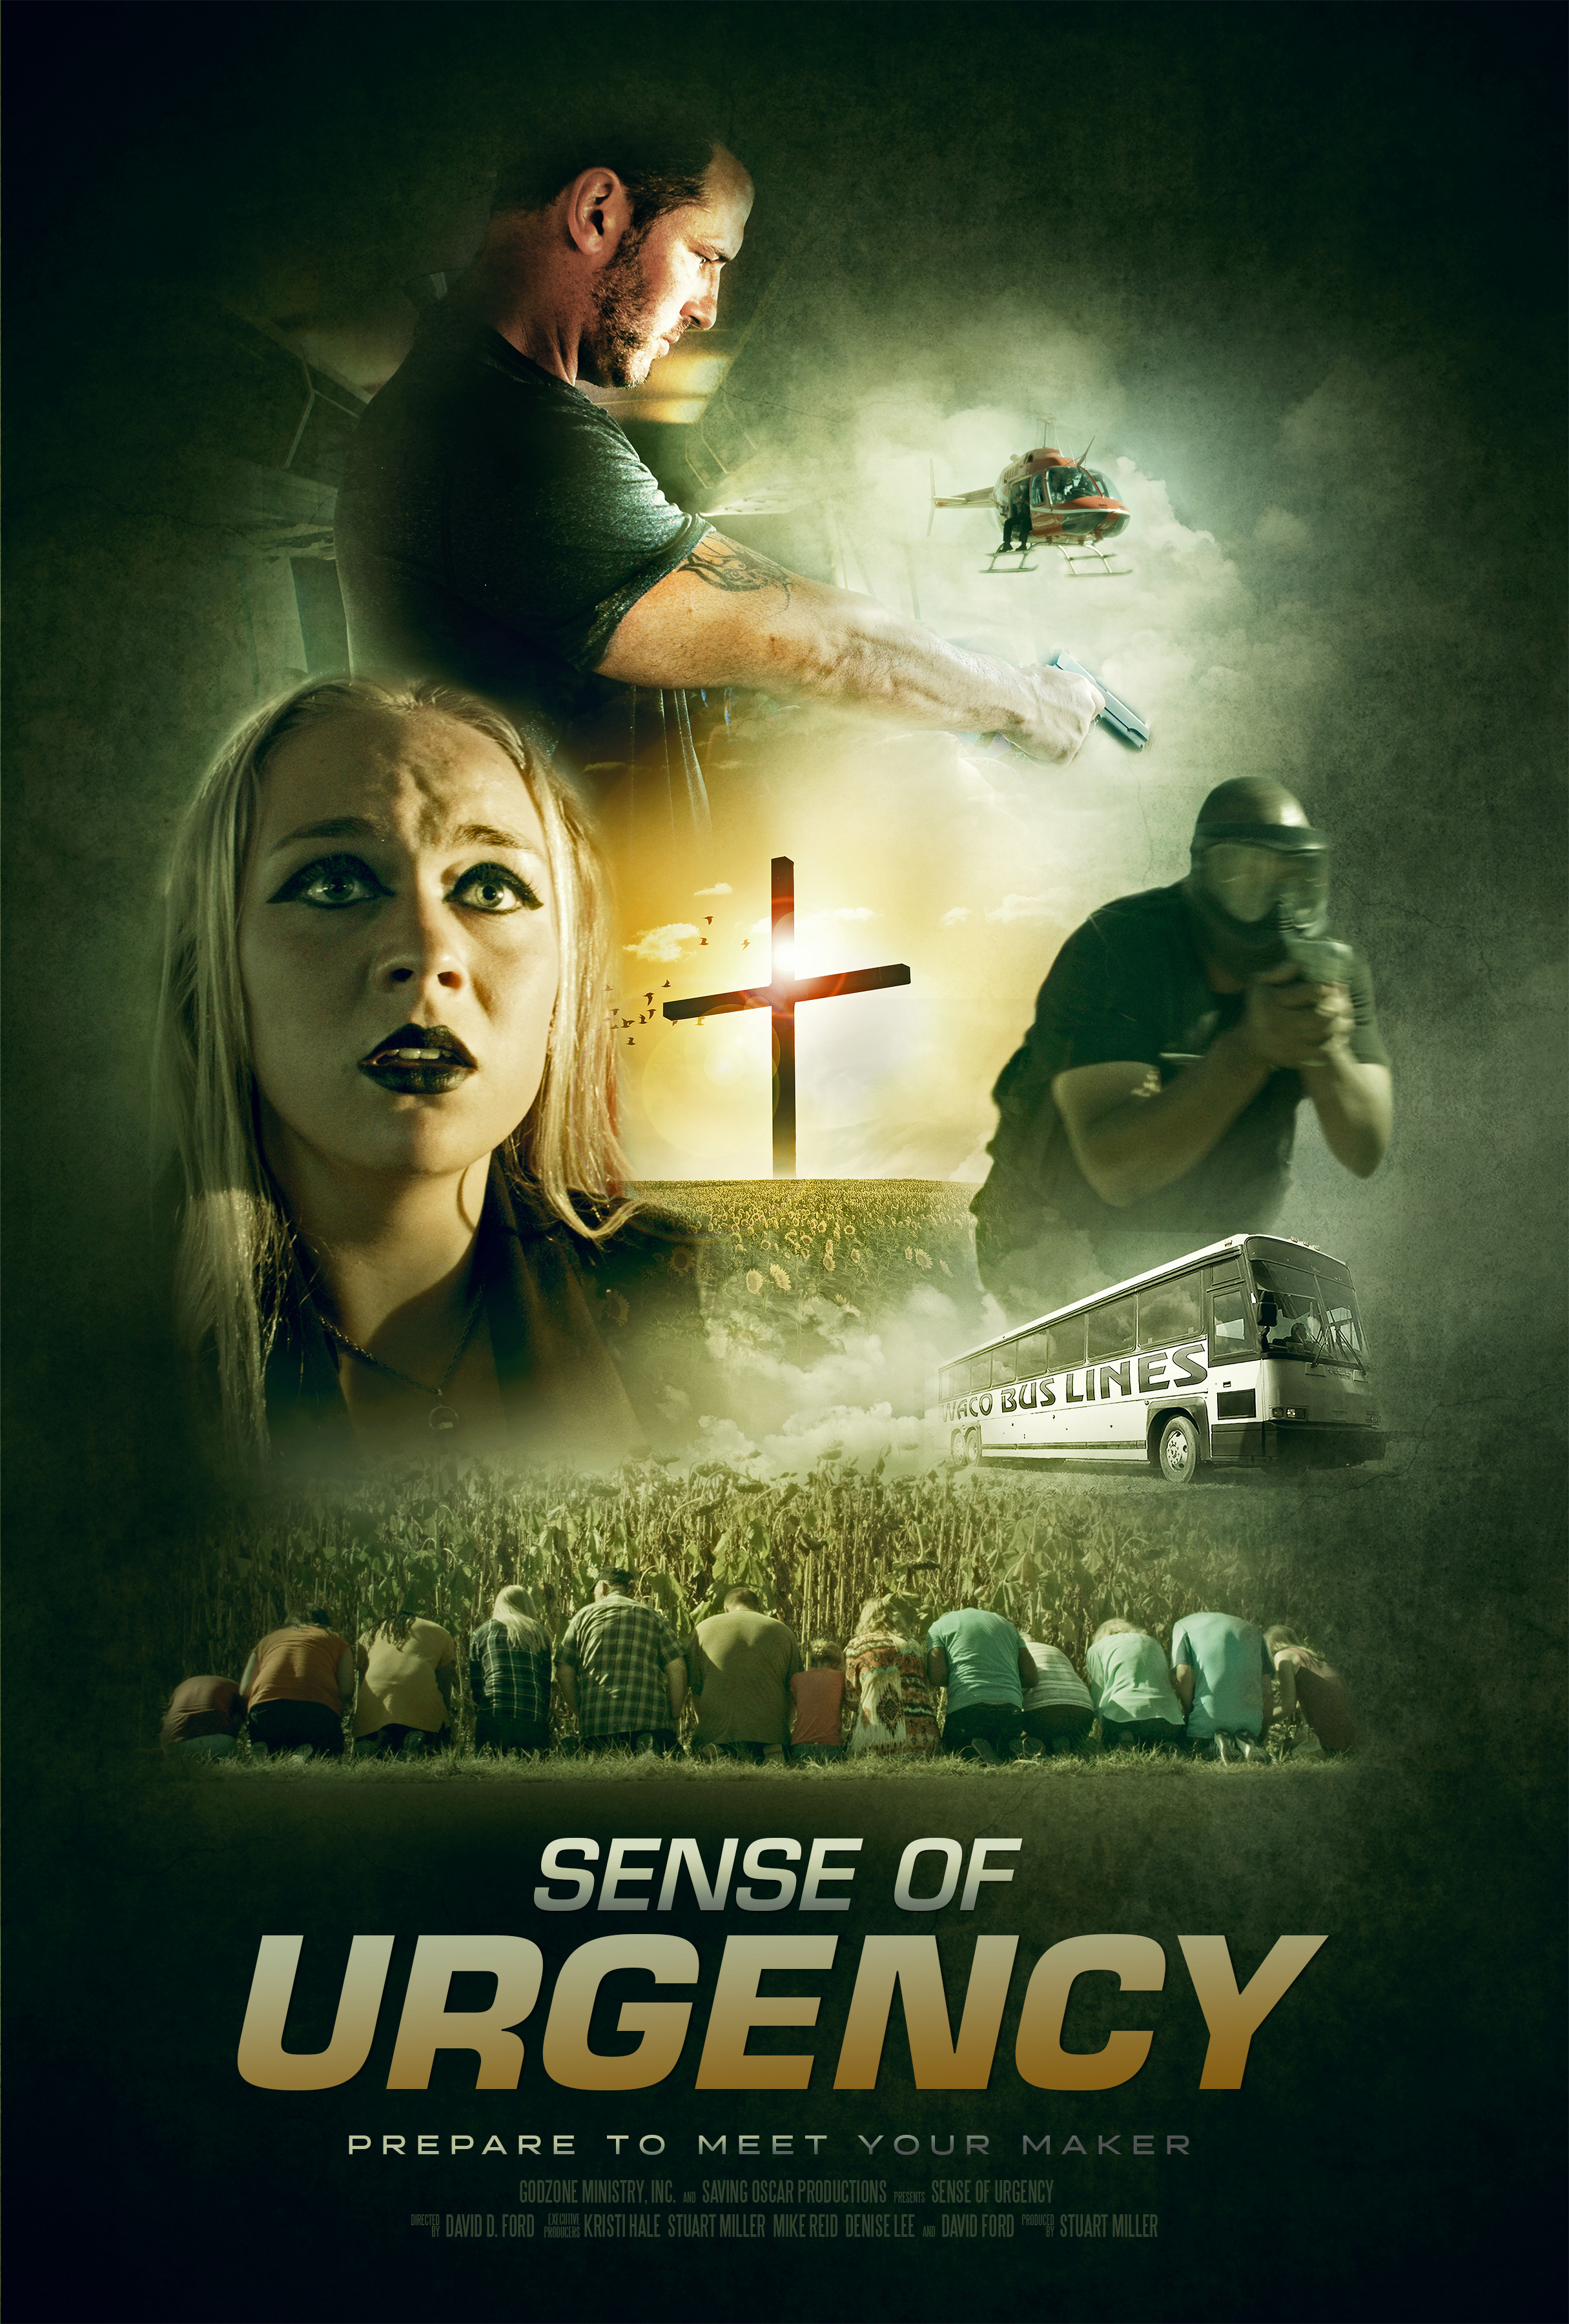 Nonton film Sense of Urgency layarkaca21 indoxx1 ganool online streaming terbaru